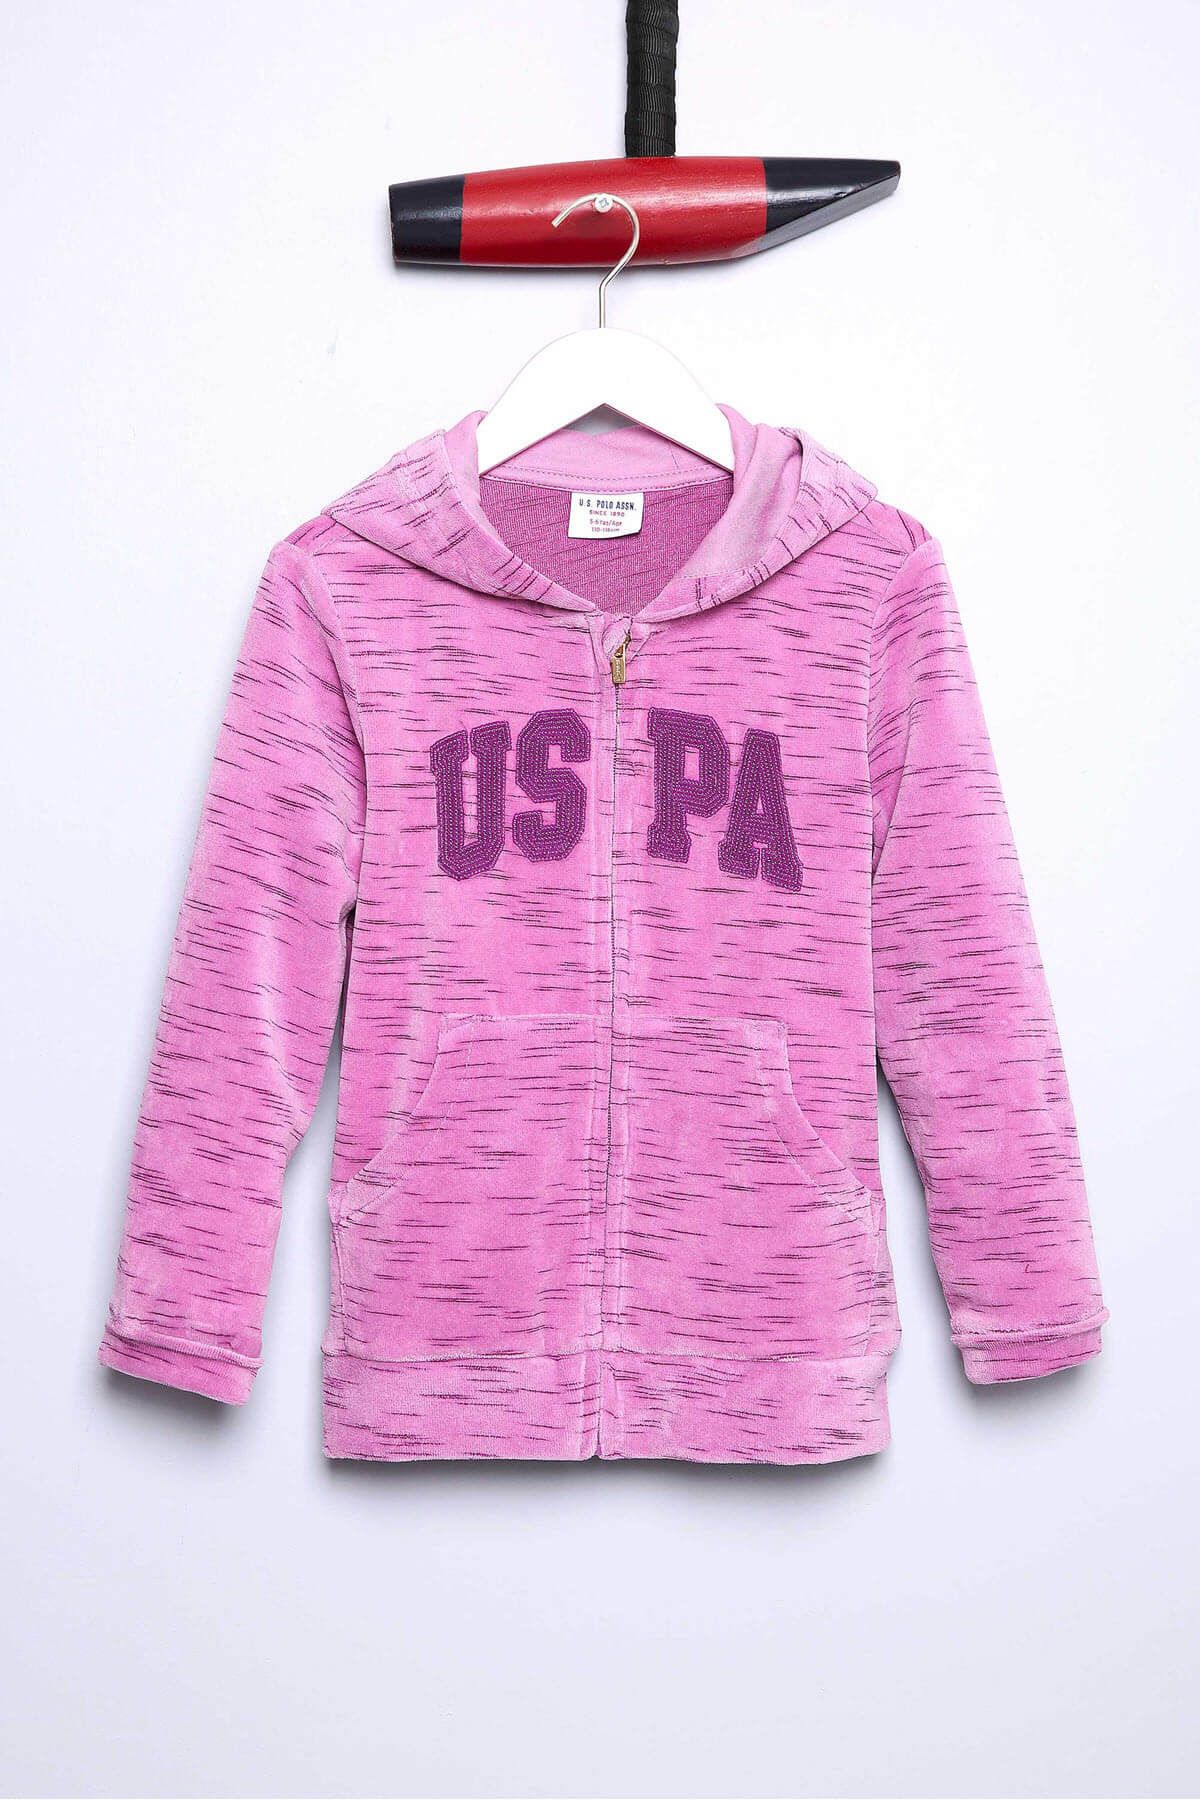 U.S. Polo Assn. Pembe Kız Cocuk Sweatshirt